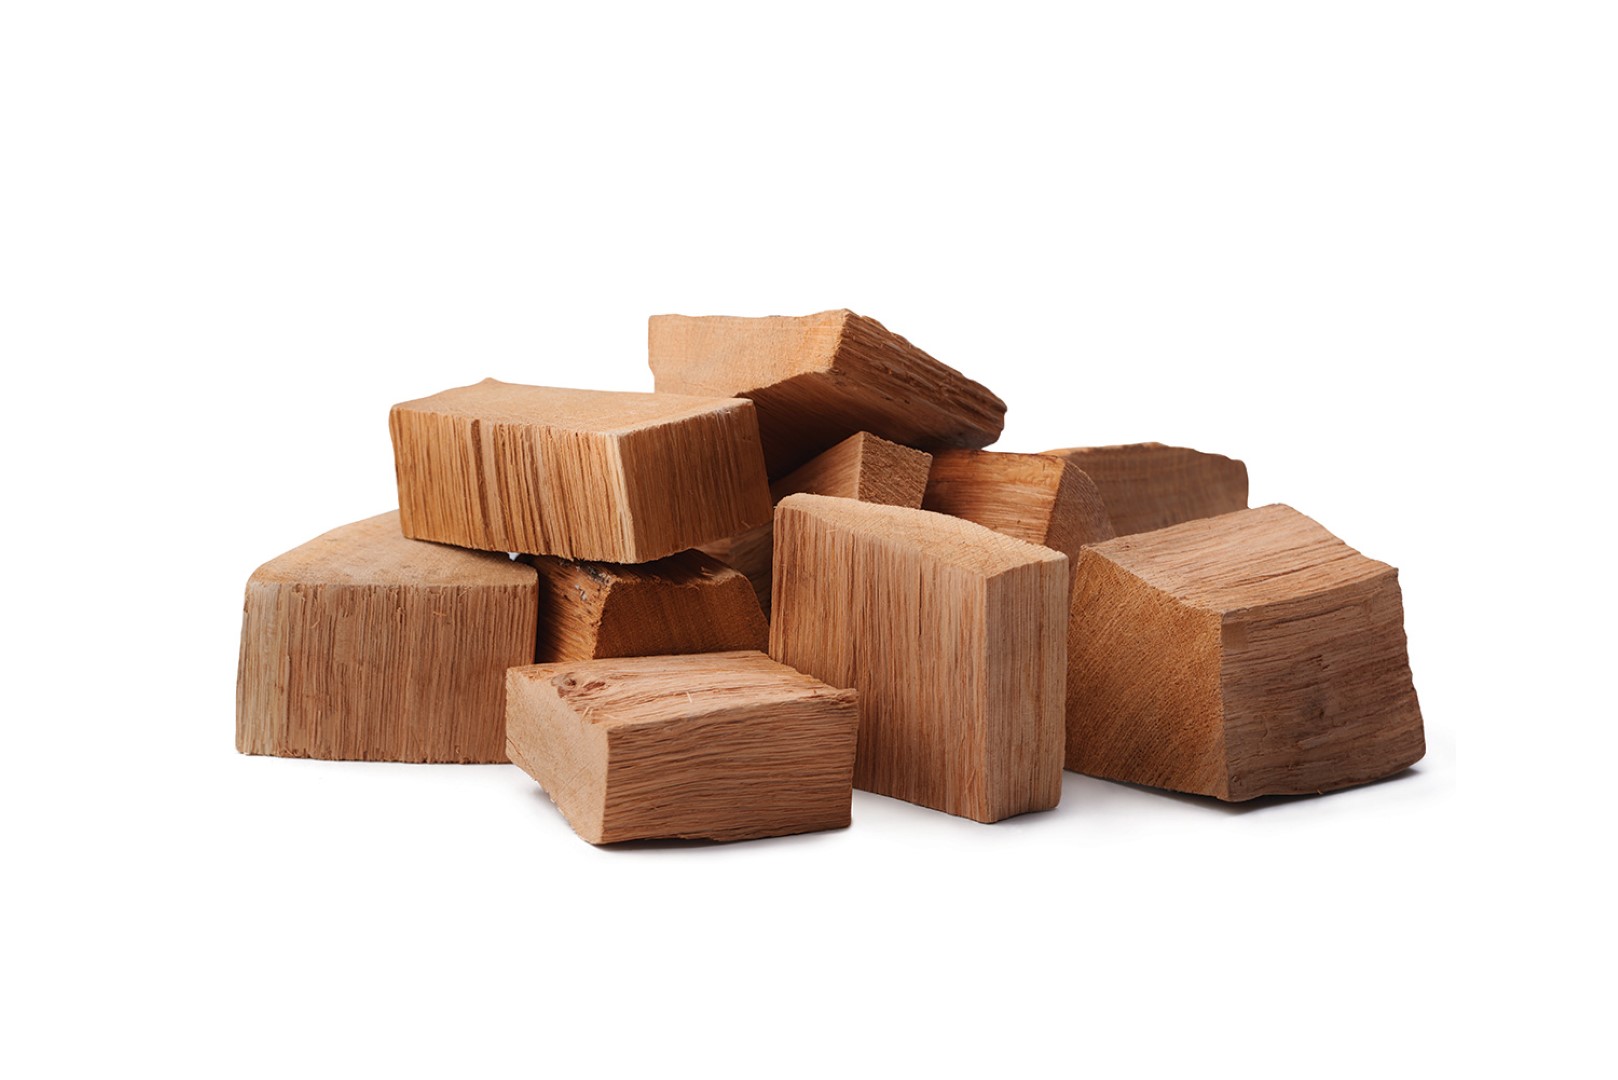 wood chunks berk 1,5kg